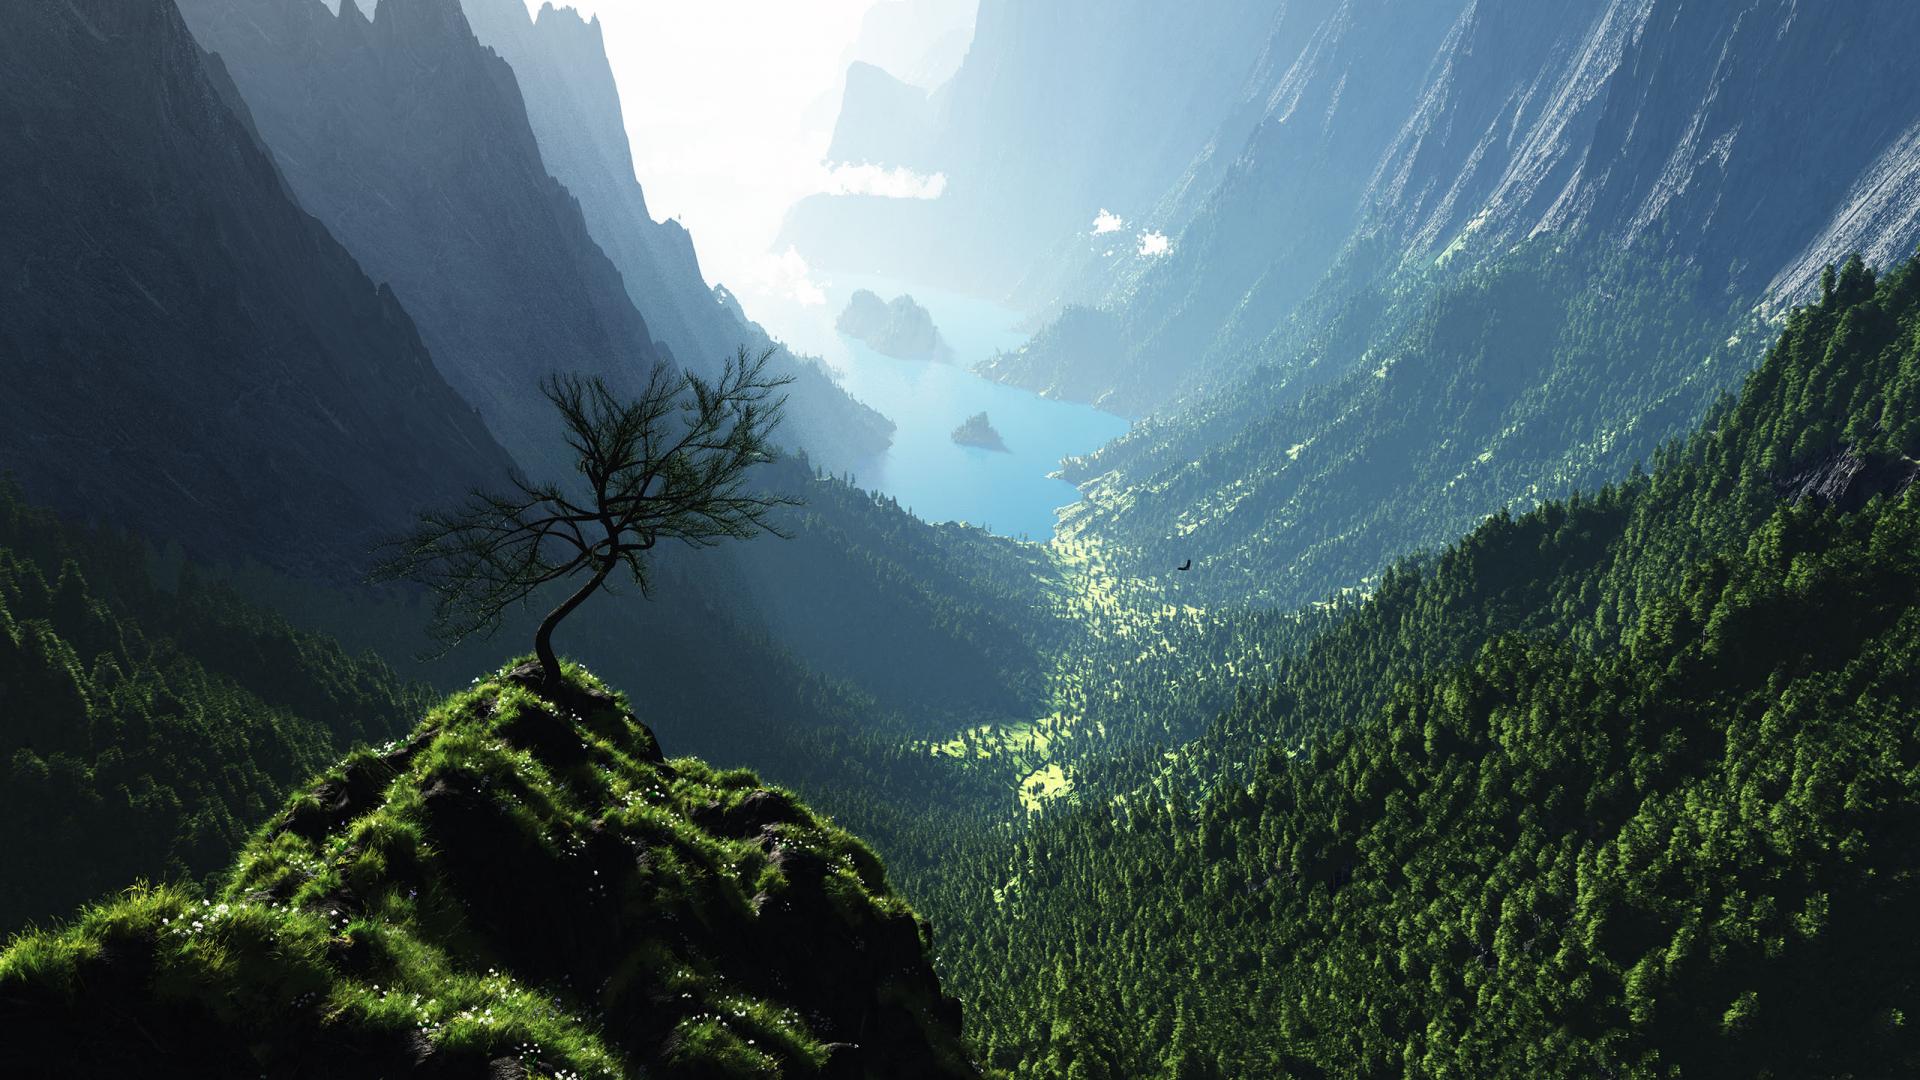 622486 descargar imagen naturaleza, árbol, paisaje, fantasía, montaña: fondos de pantalla y protectores de pantalla gratis